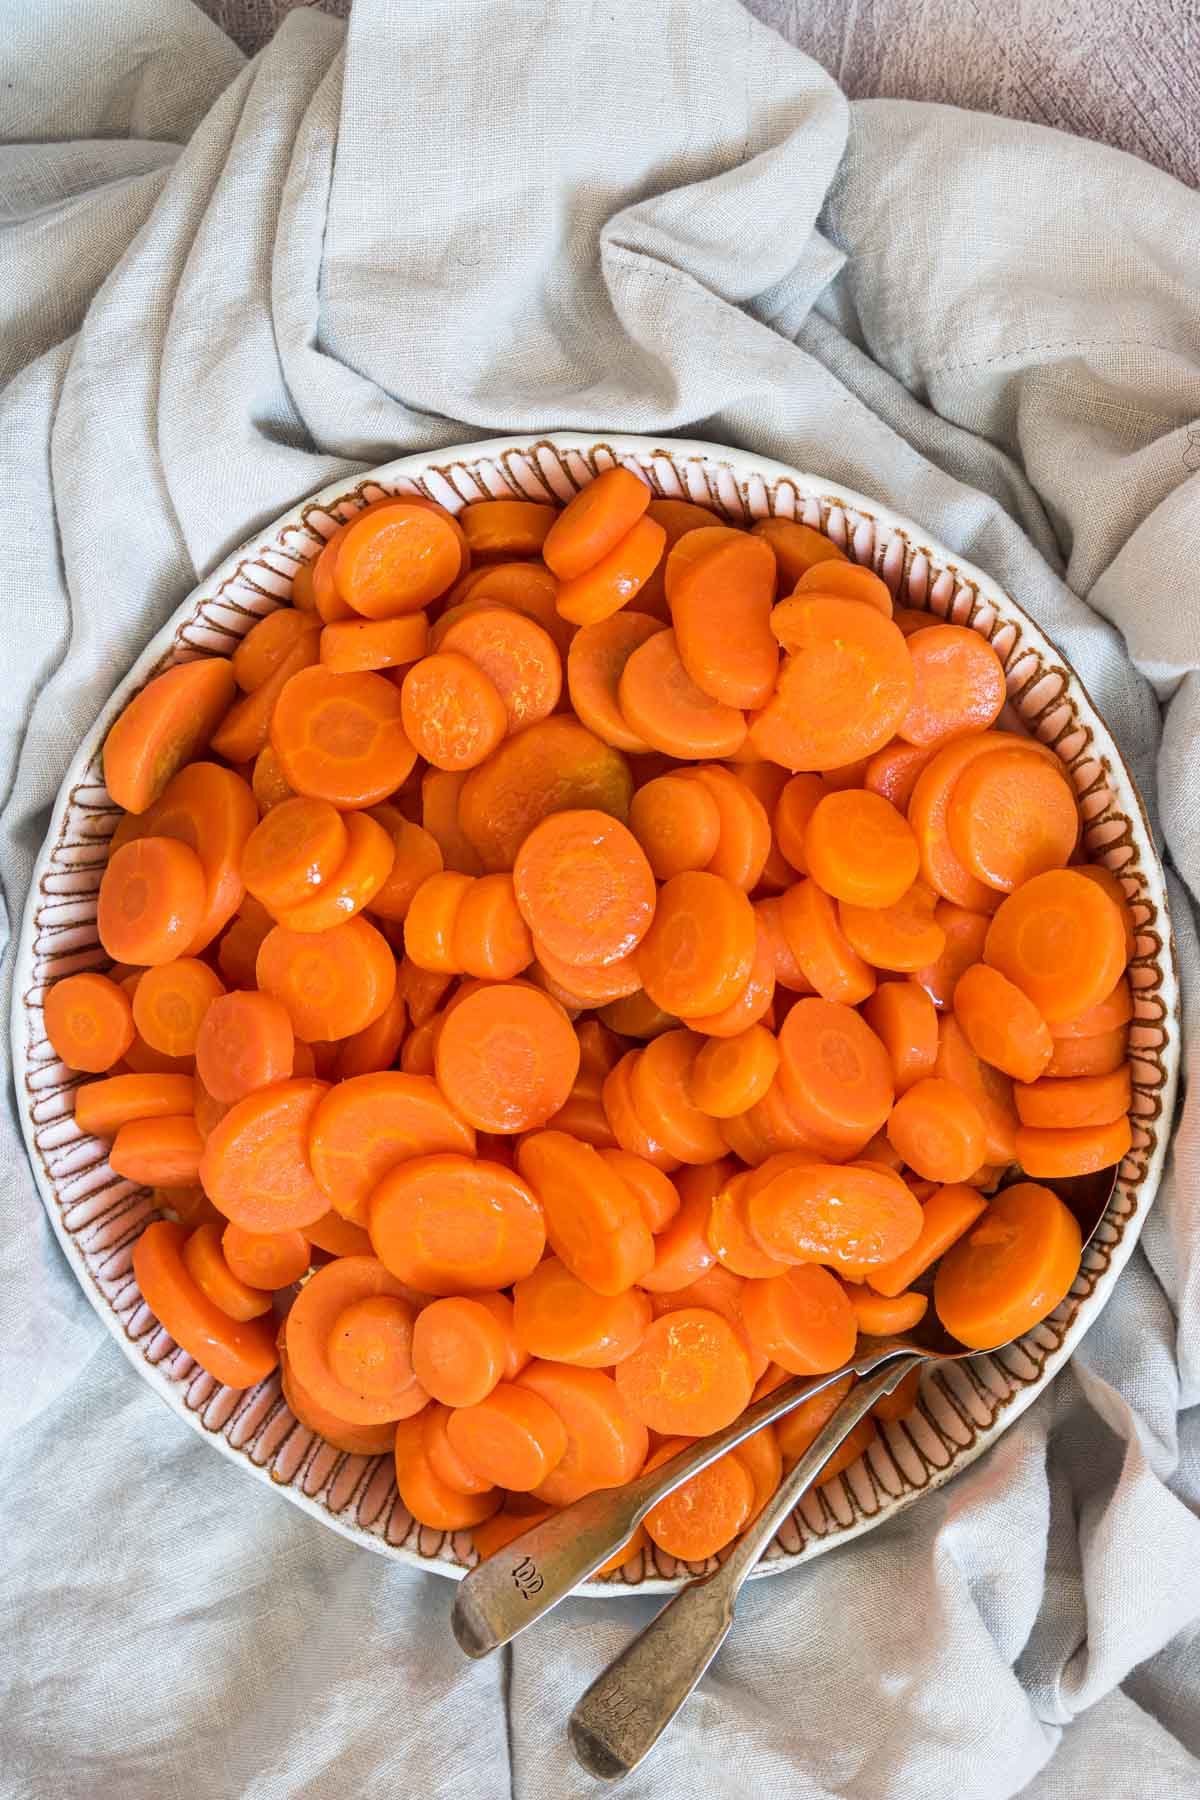 Microwave Carrots